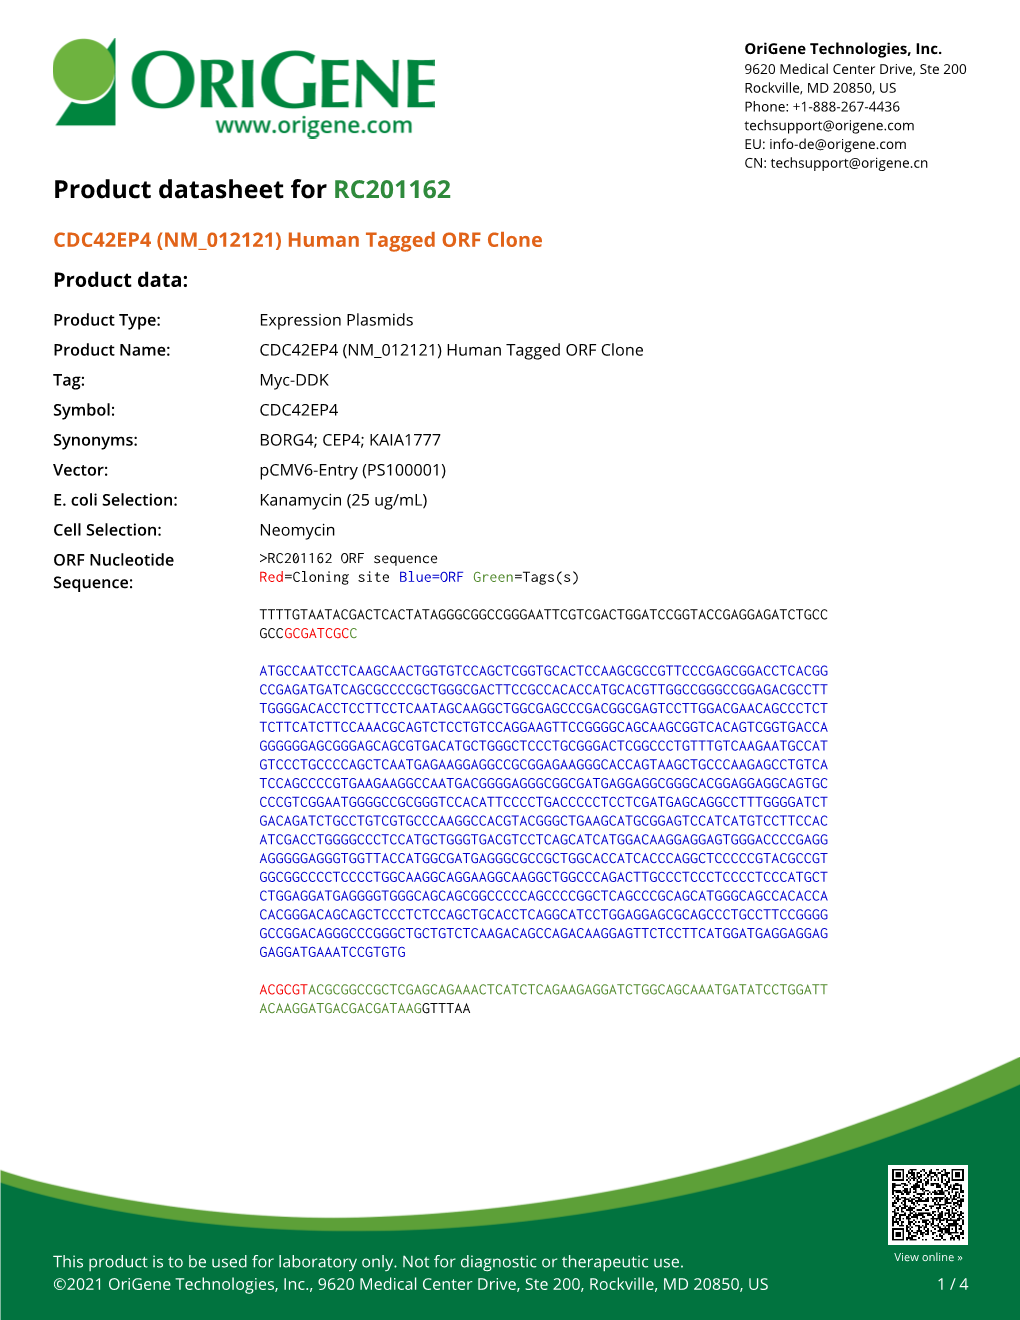 CDC42EP4 (NM 012121) Human Tagged ORF Clone – RC201162